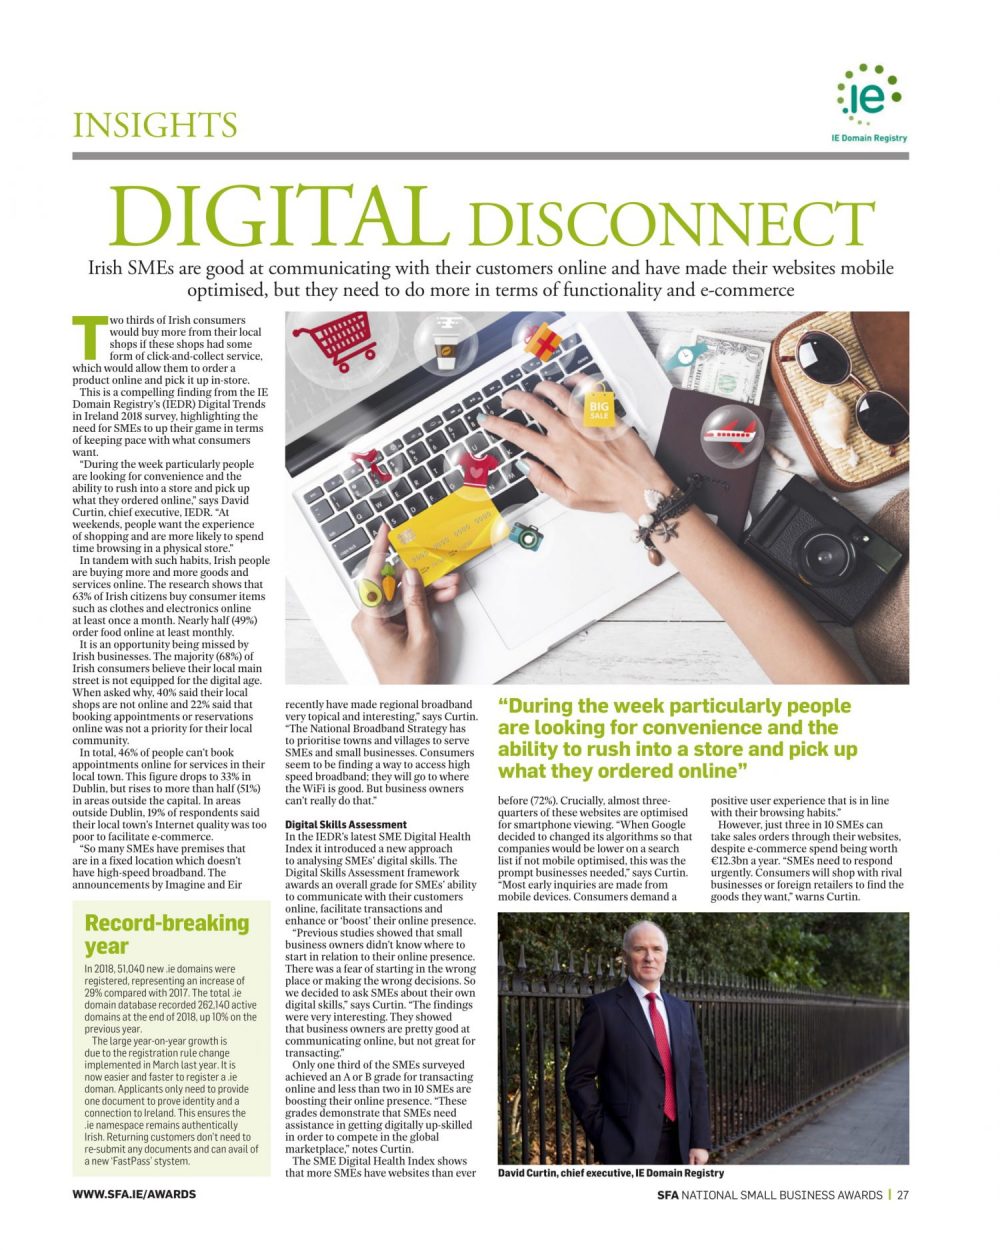 David Curtin Digital Disconnect article